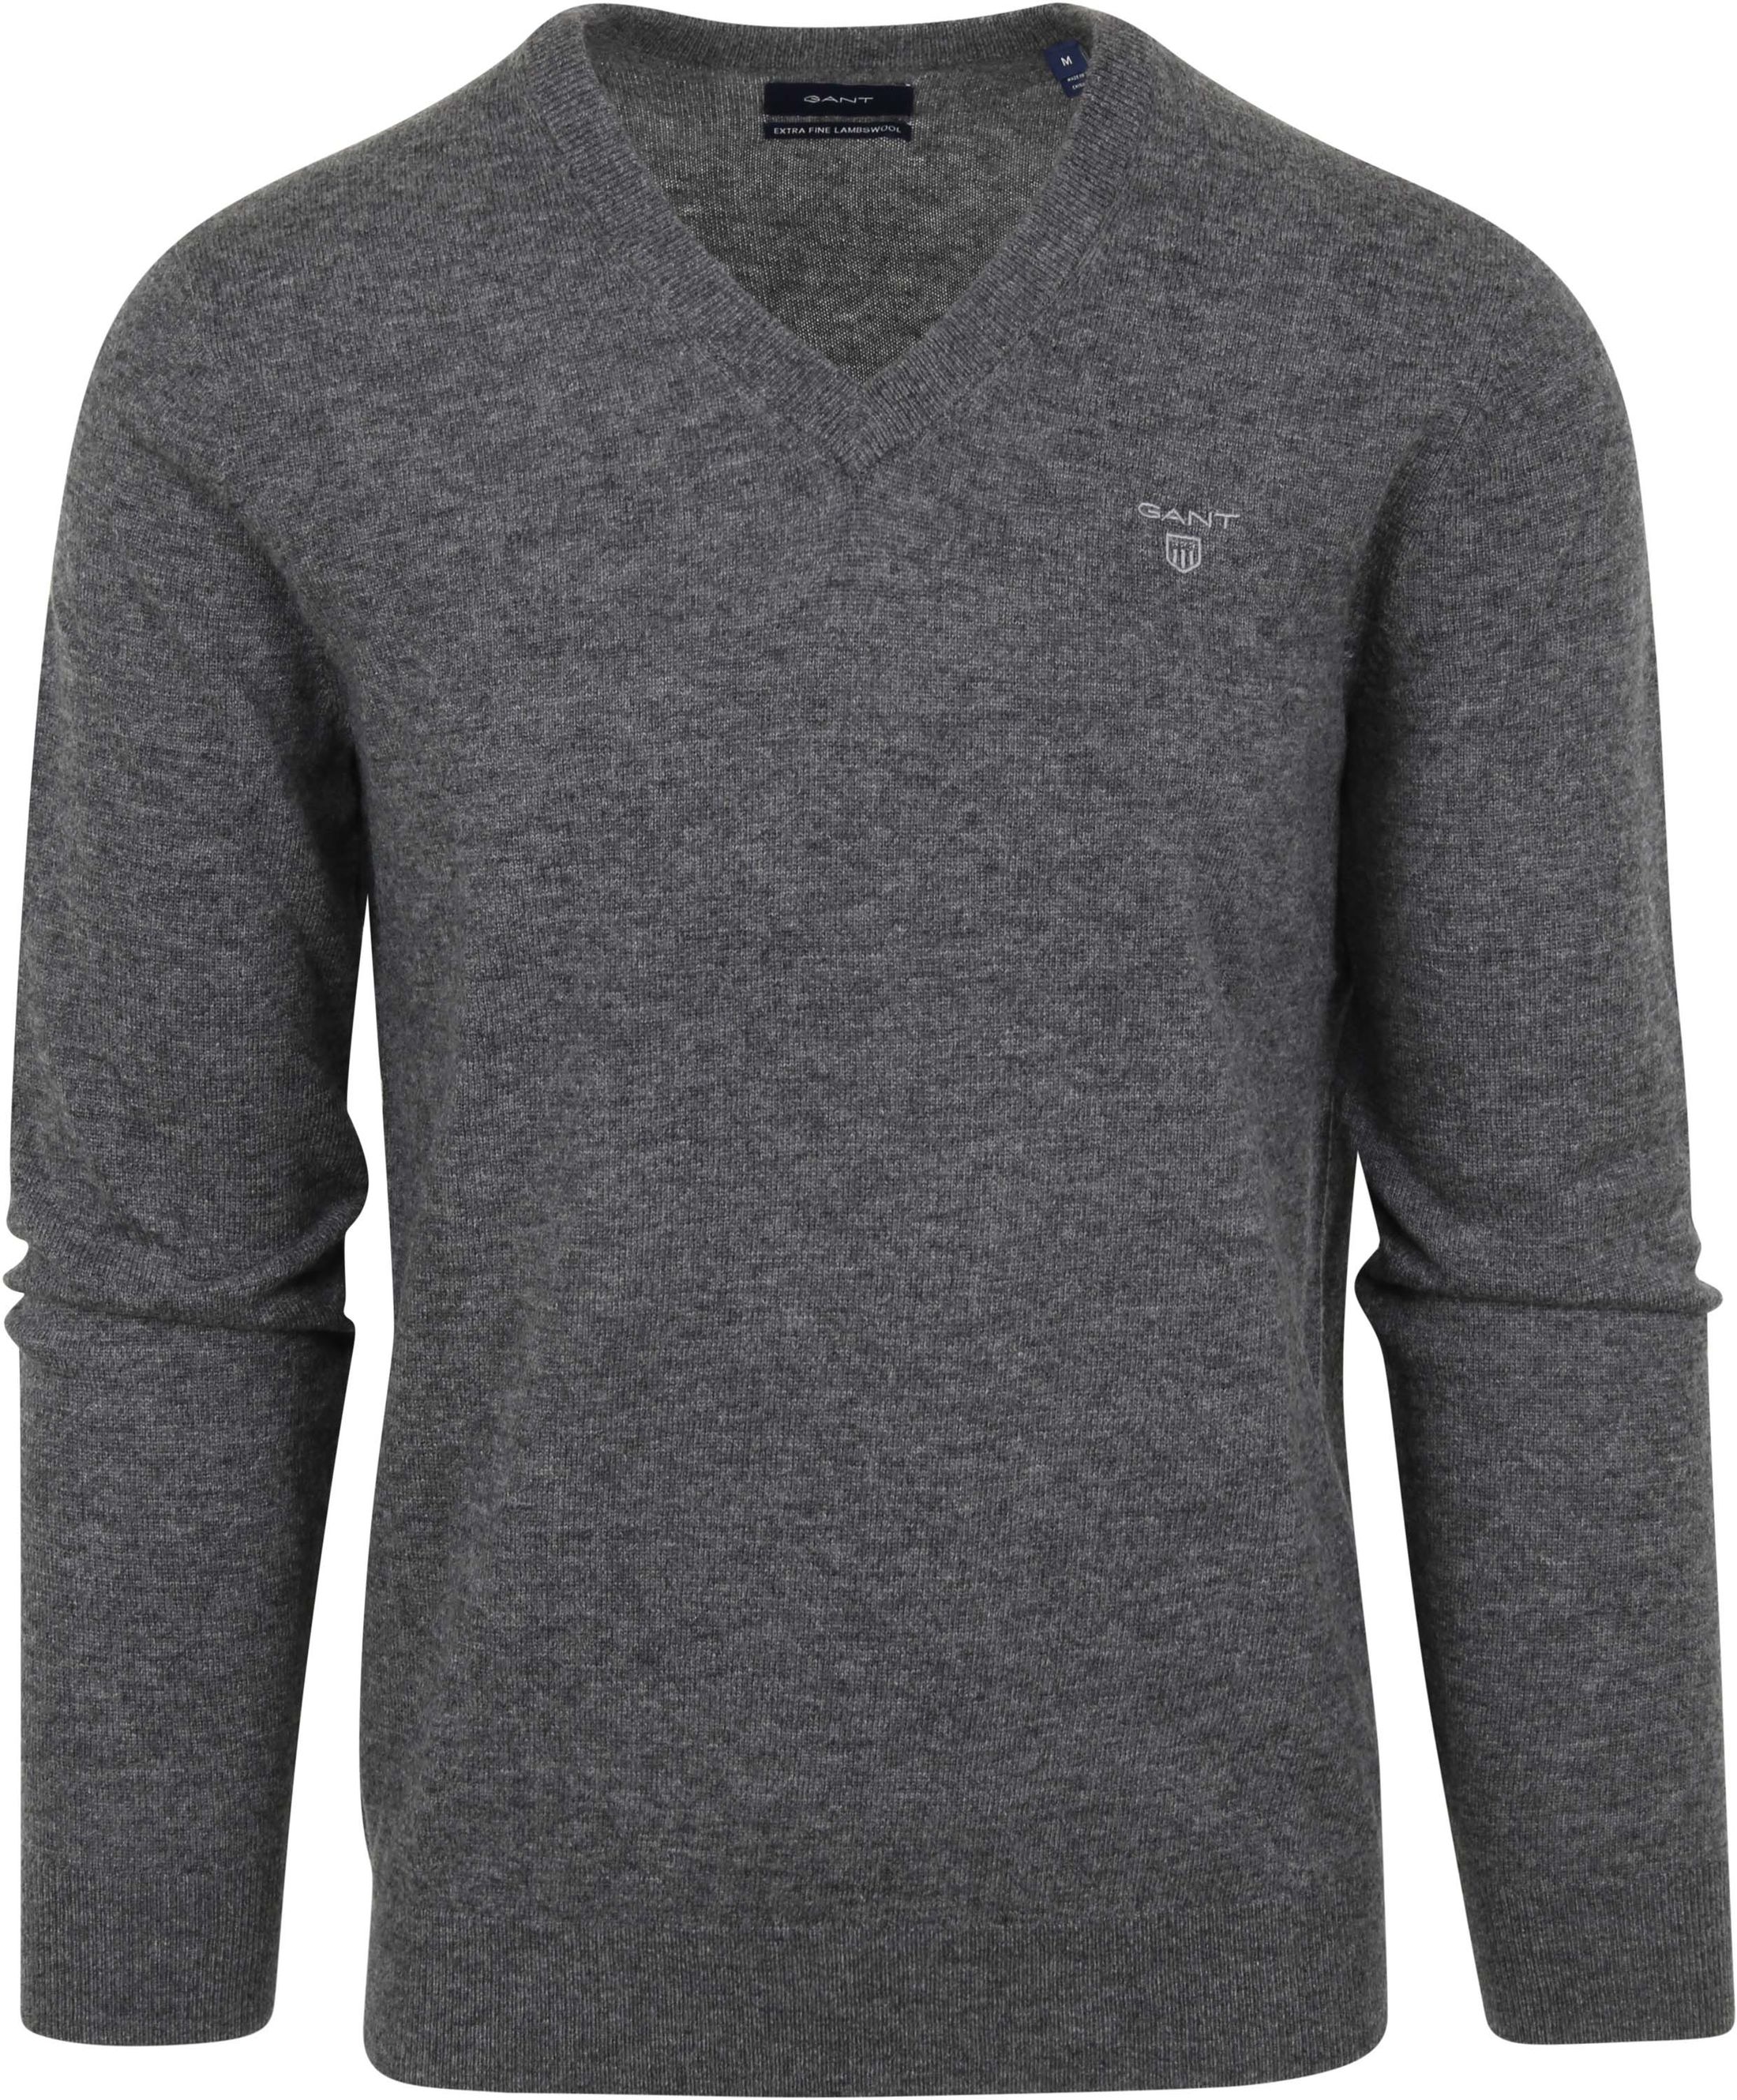 Gant Sweater Lambswool Anthracite Dark Grey Grey size L